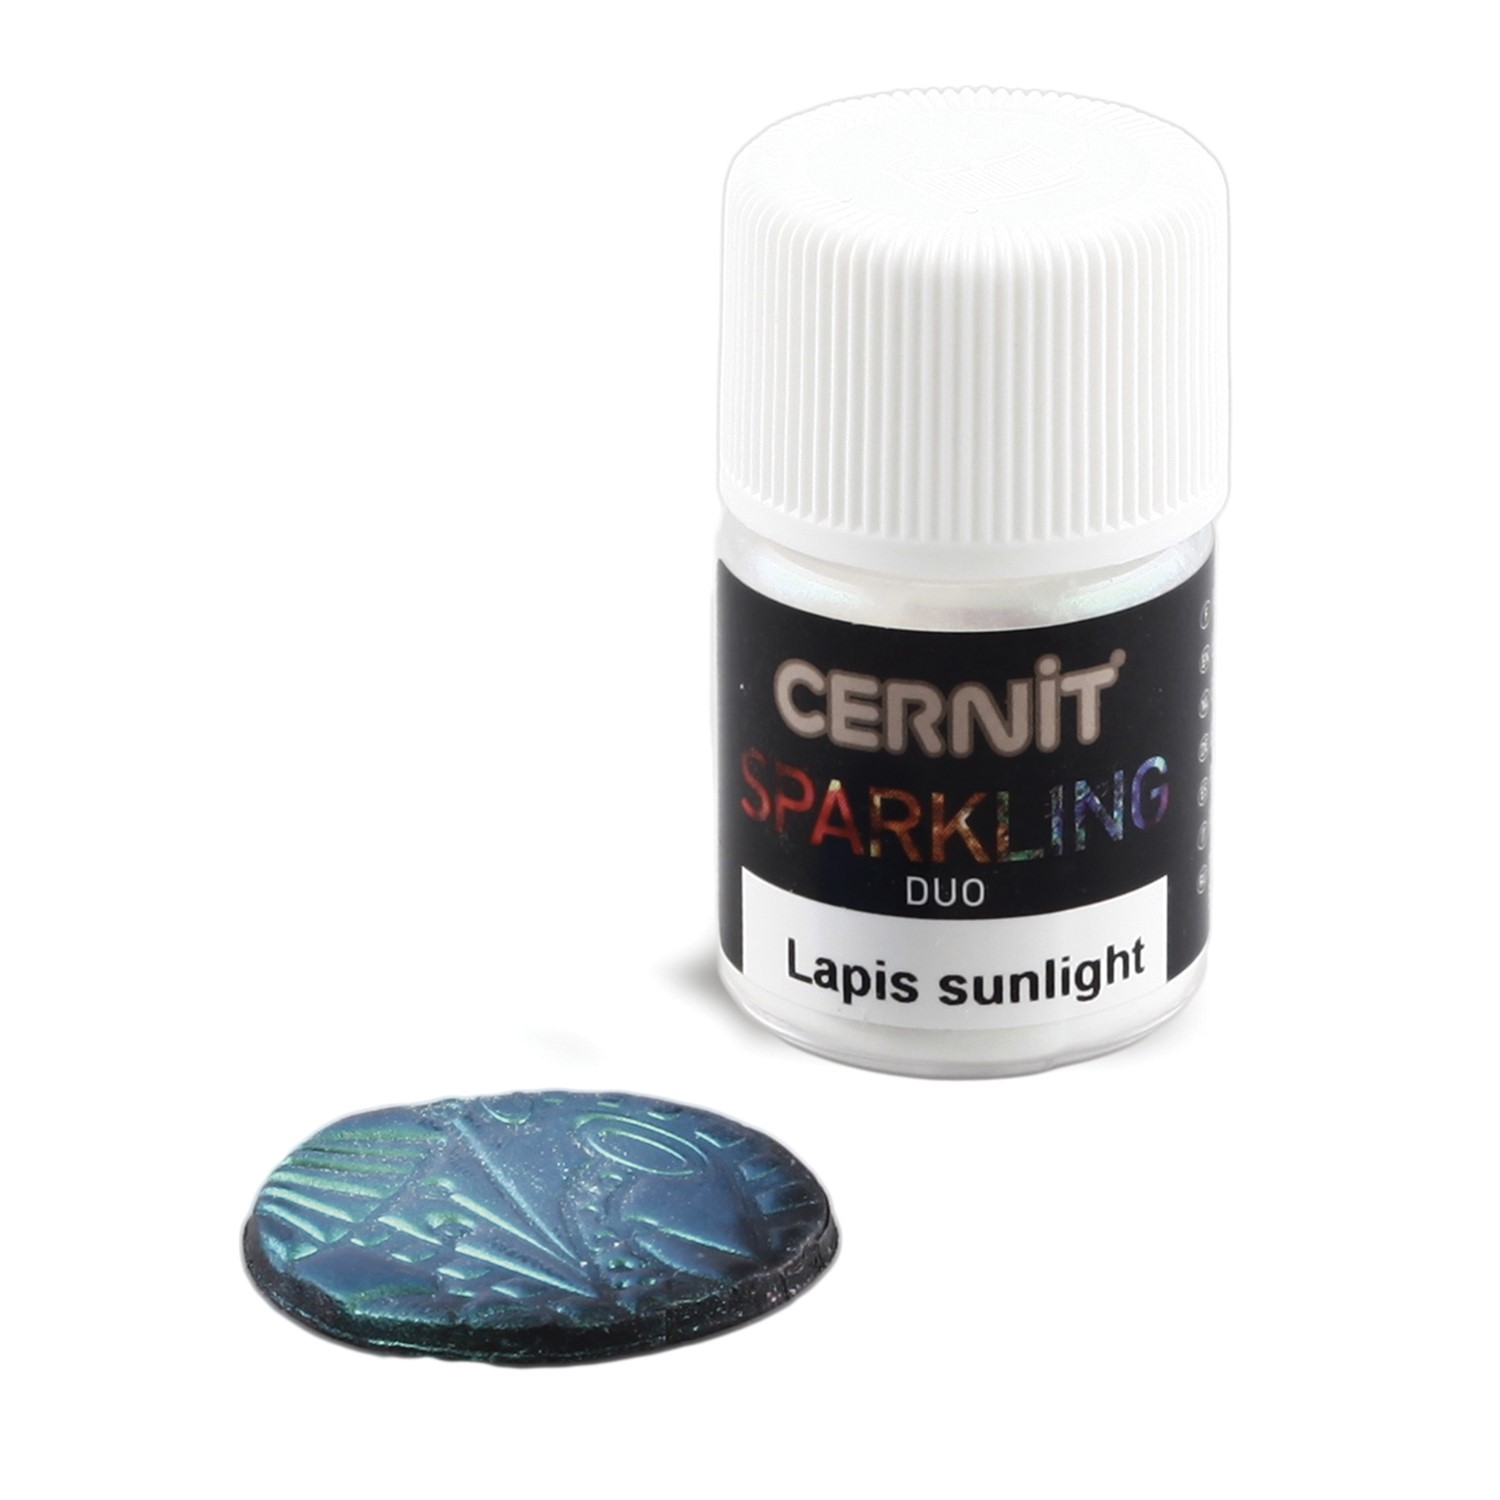 Cernit Auxiliary - Sparkling lapis sunlight 2g